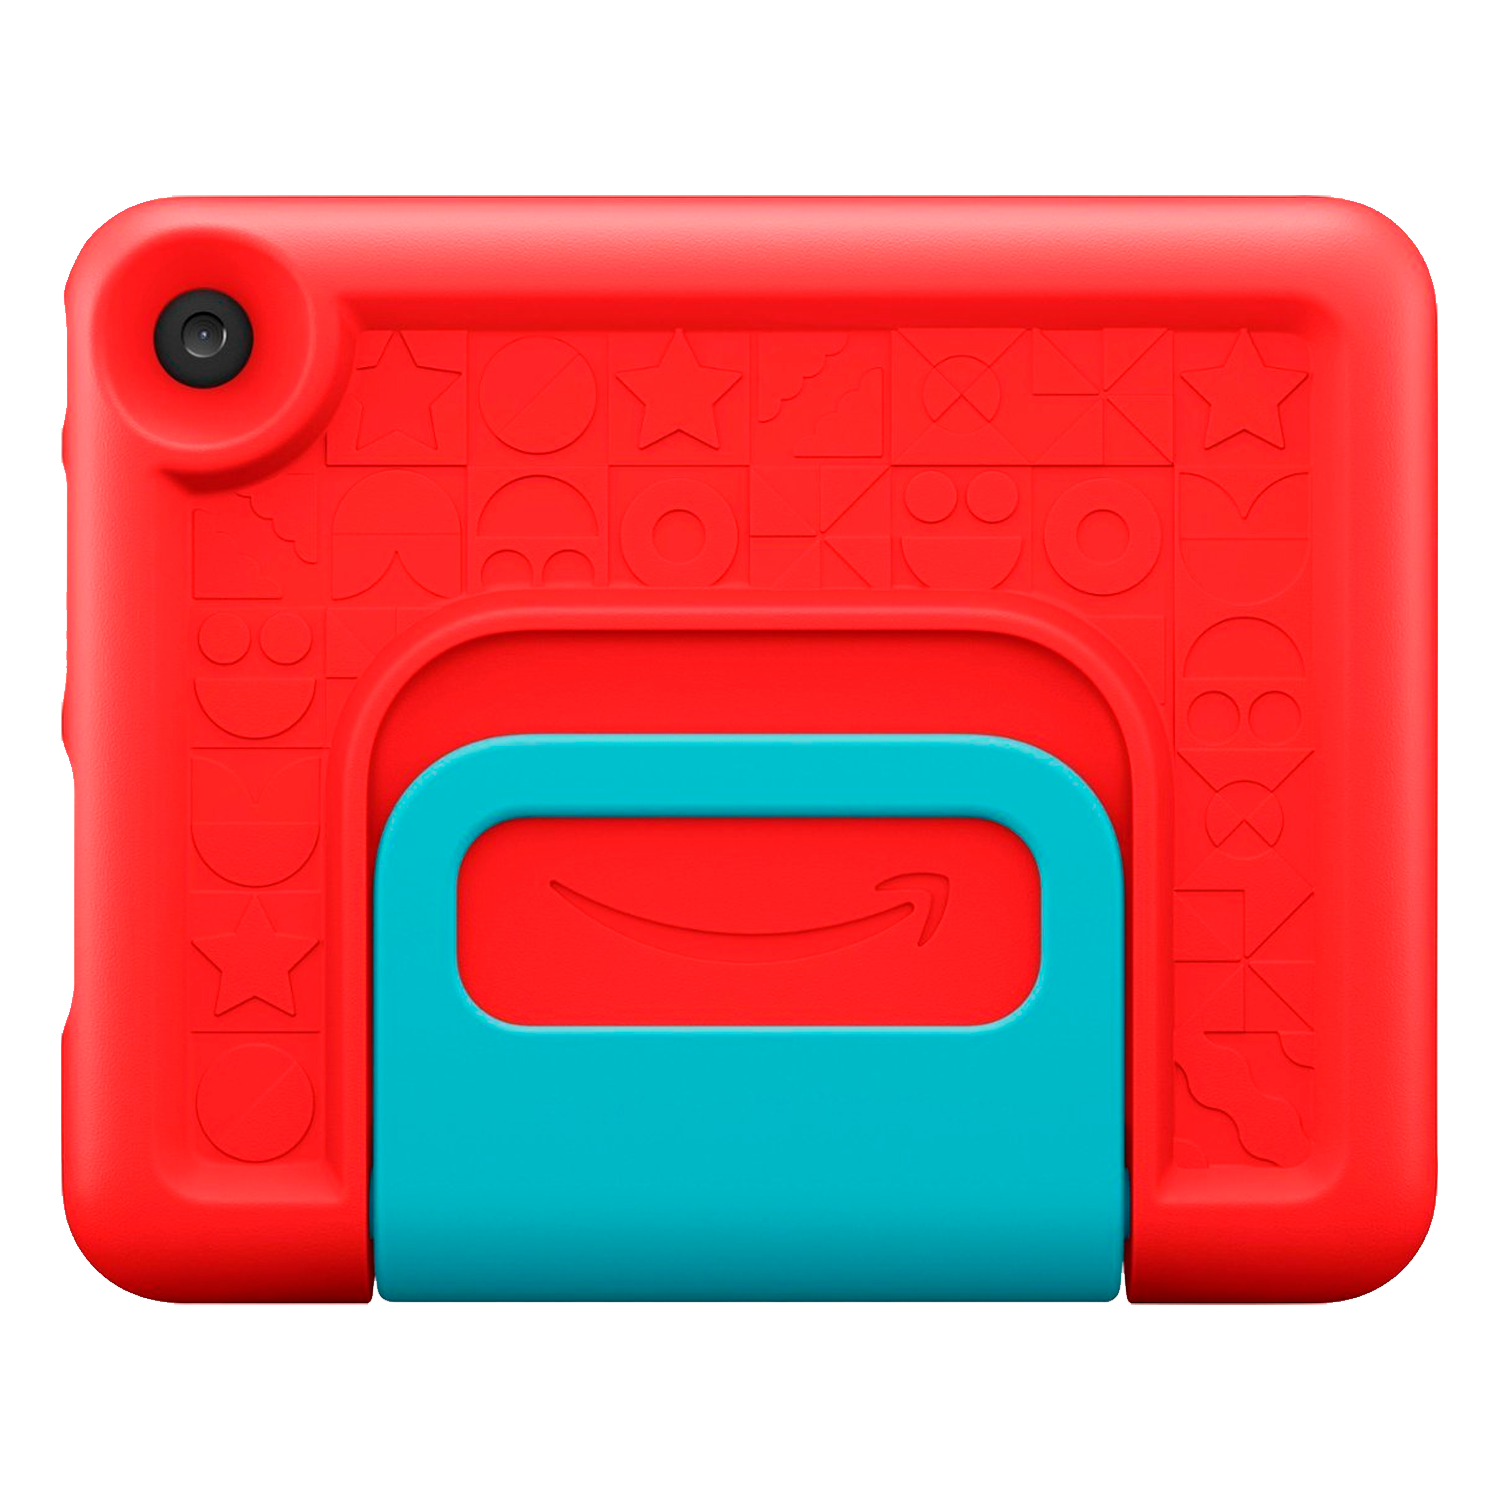 Tablet Amazon Fire HD 7 32GB / Tela 7" - Red Kids